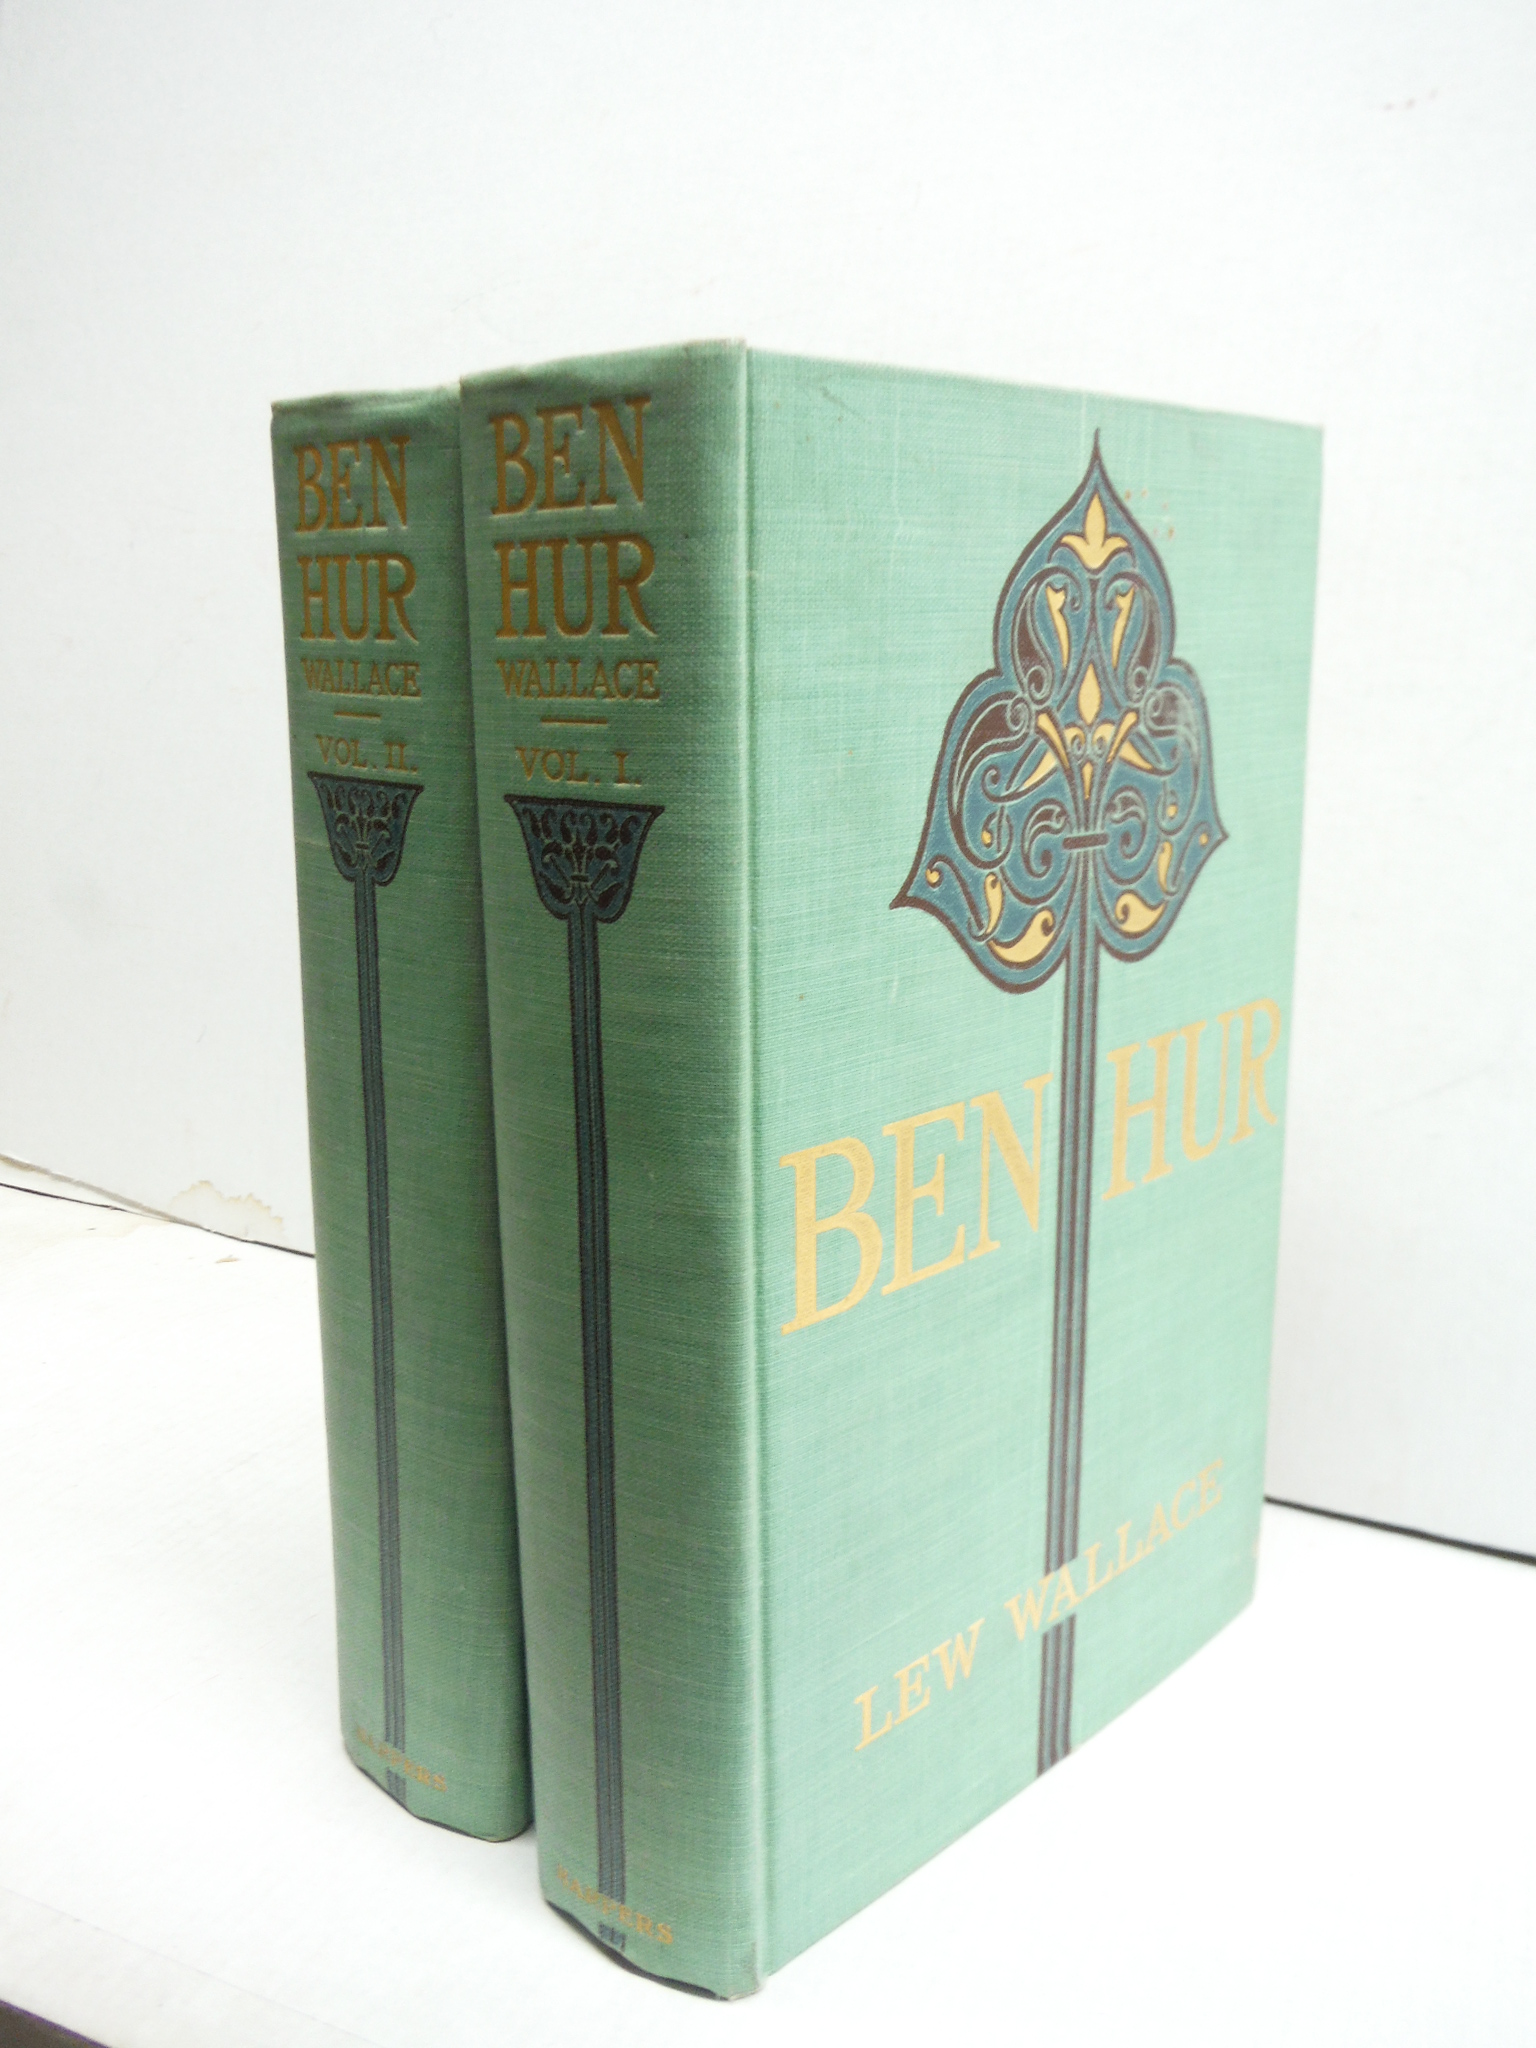 Ben Hur 2 volumes, antique